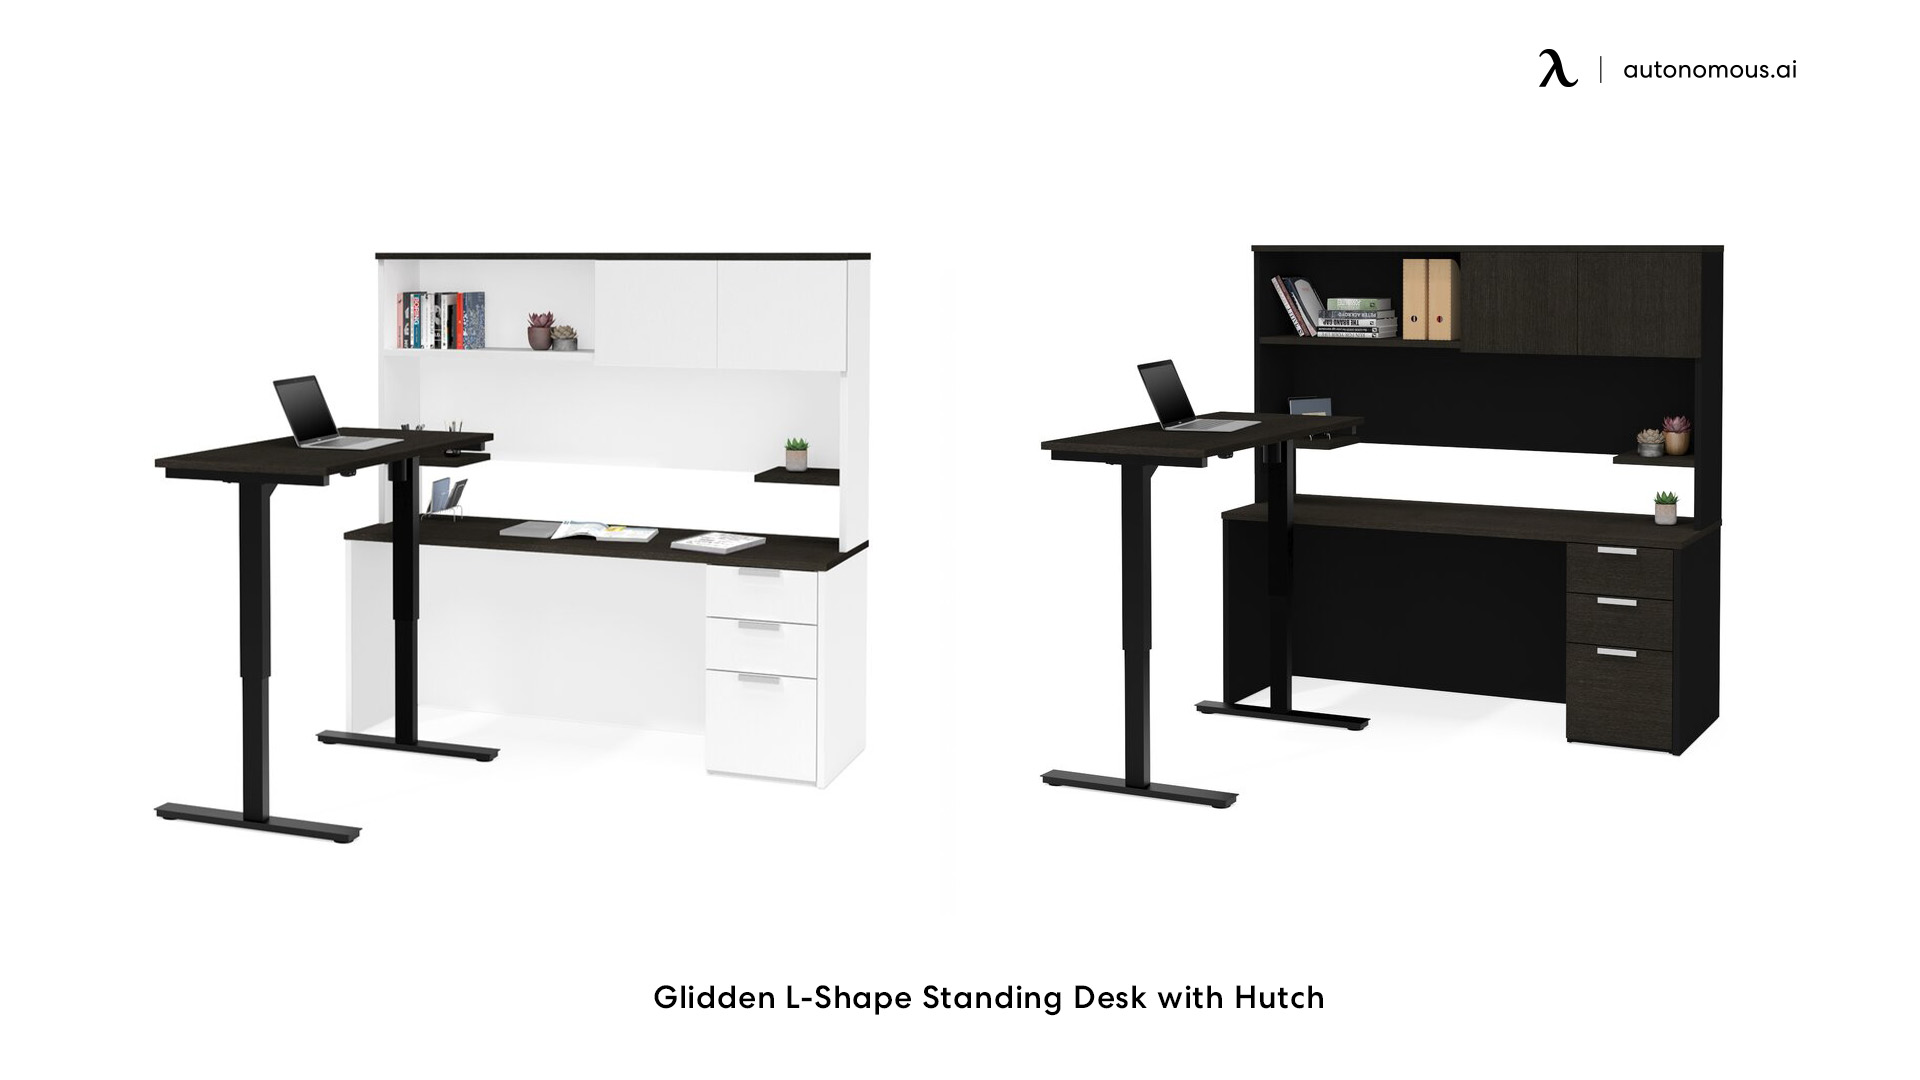 Glidden standing desk for two monitors